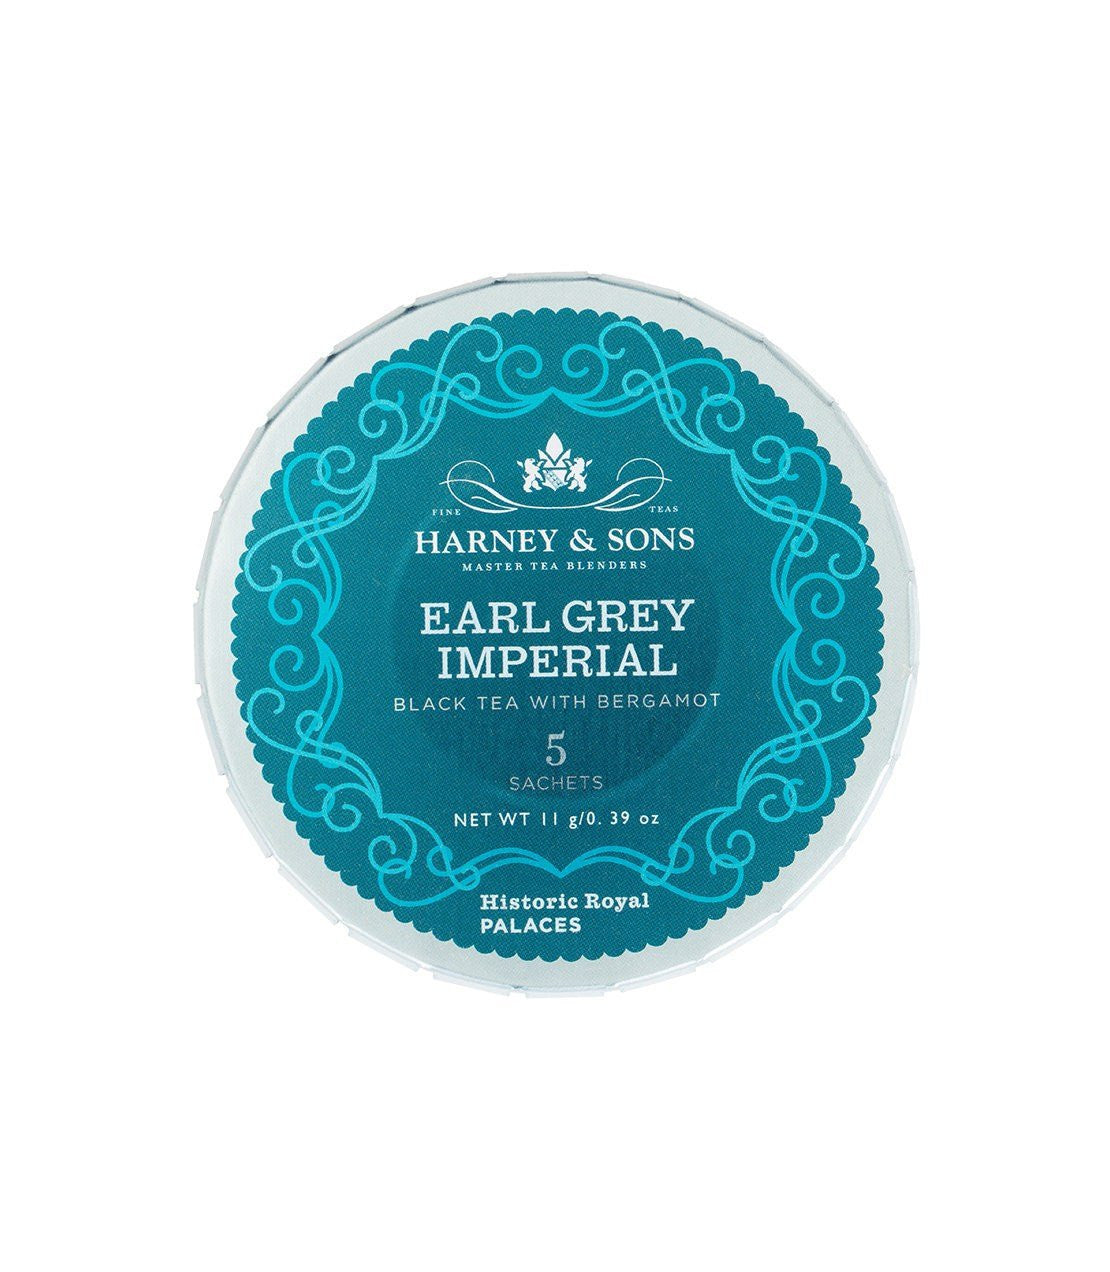 Earl Grey Imperial Tea tin - 5 Sachets by Harney & Sons